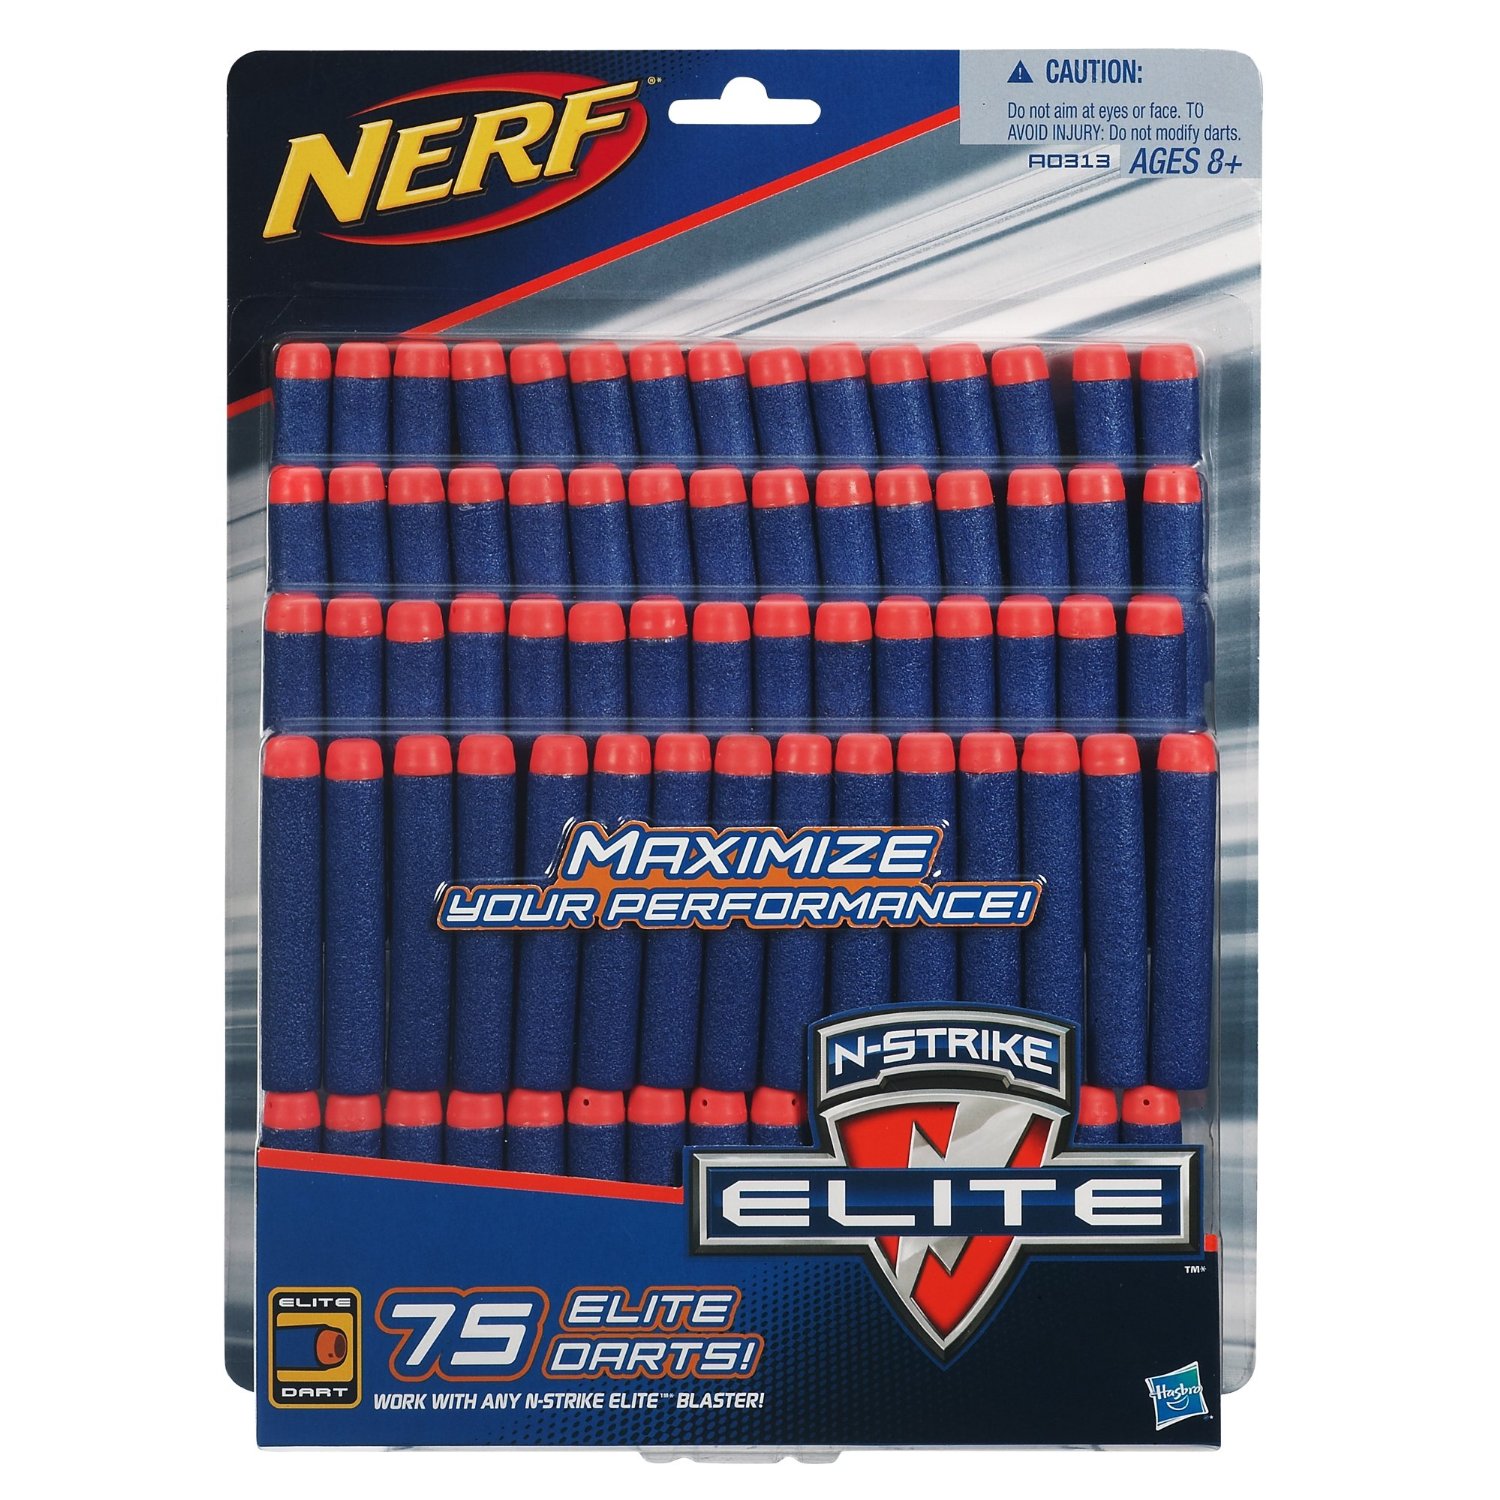 Nerf N-Strike Elite Dart Refill Pack – 75 Darts – $18.99!